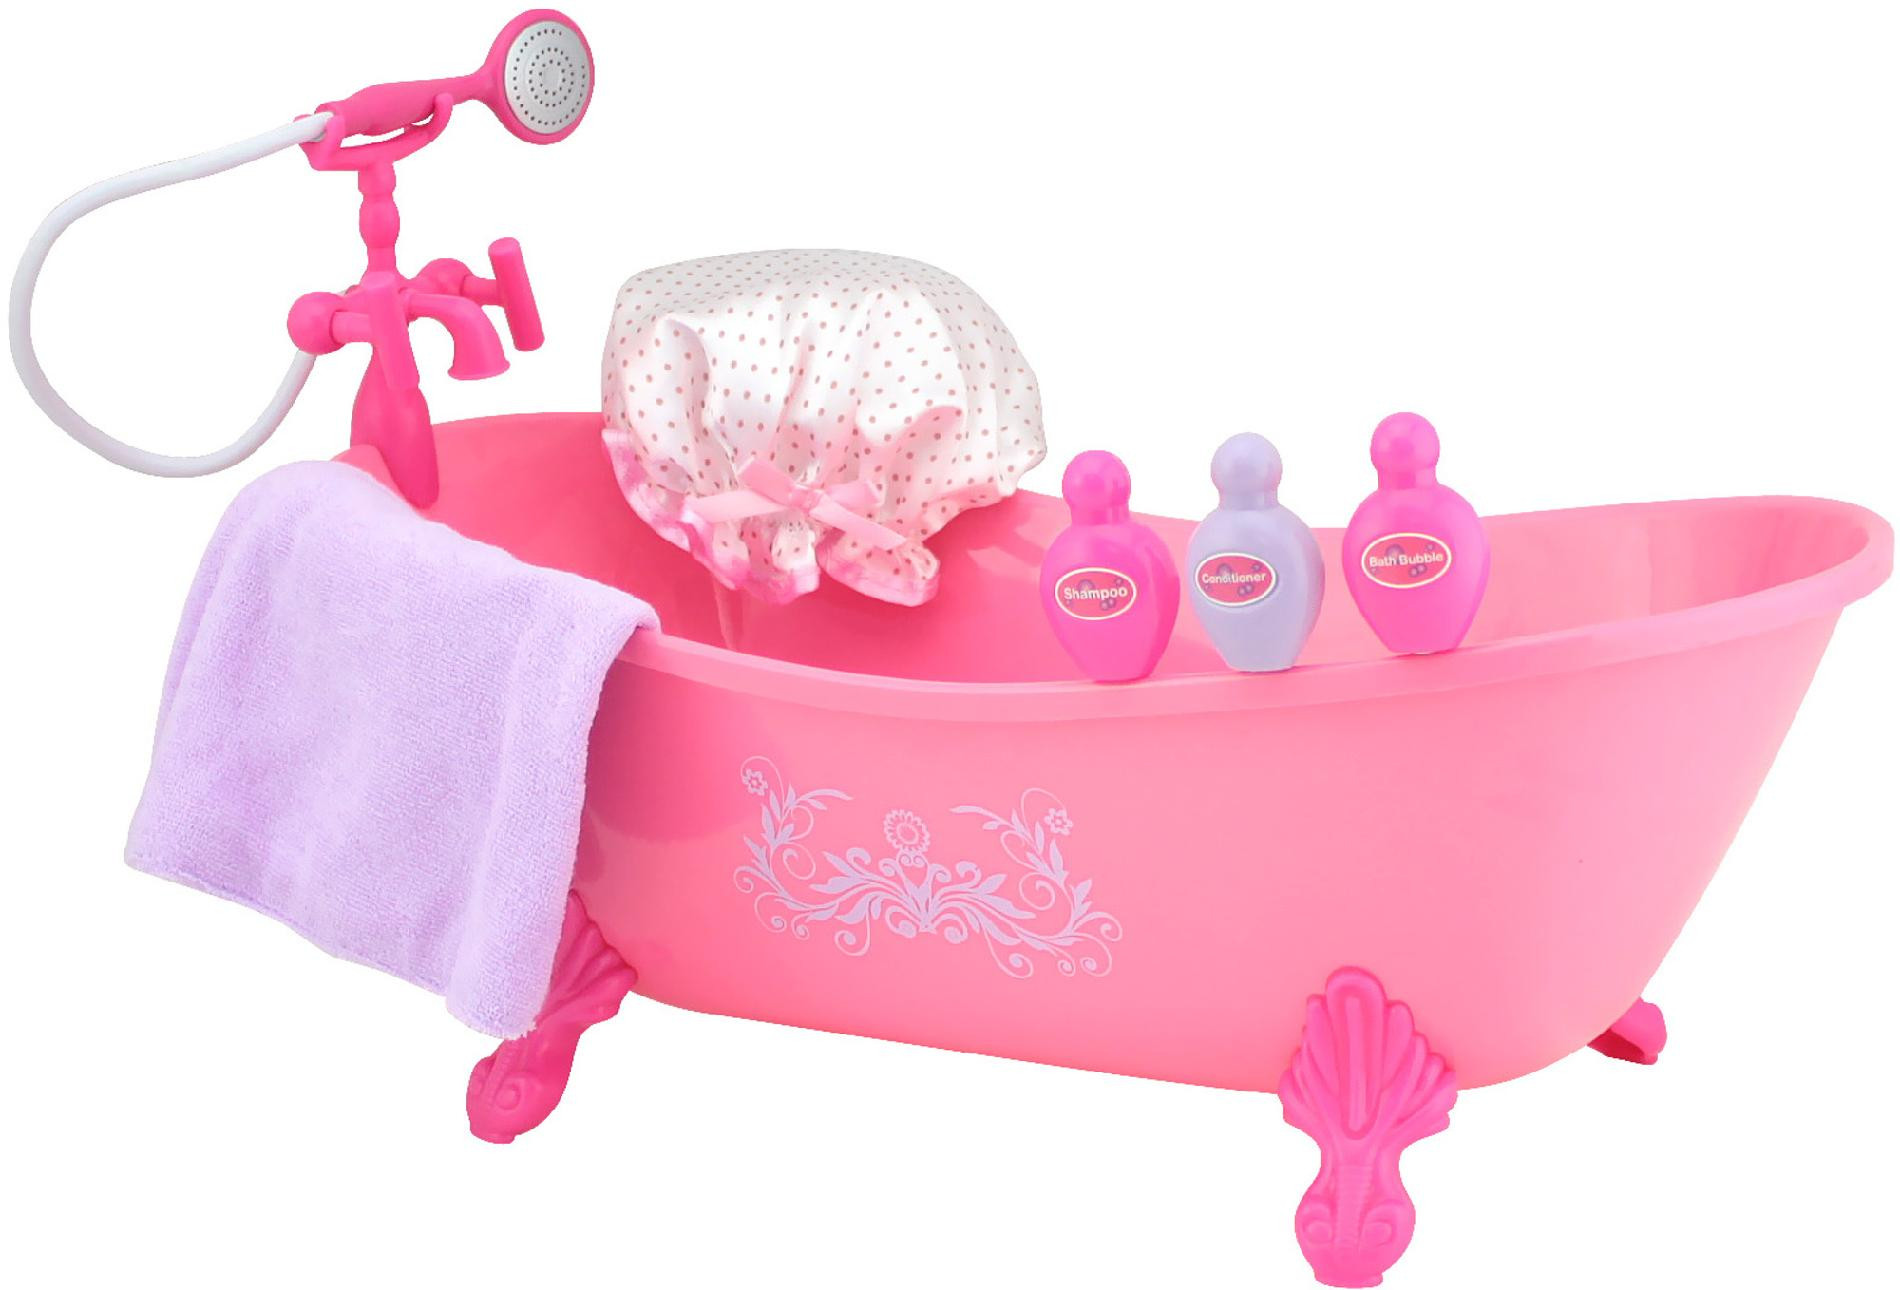 Best ideas about Baby Doll Bathroom
. Save or Pin My Girl 18" Doll Bath Tub Set Now.